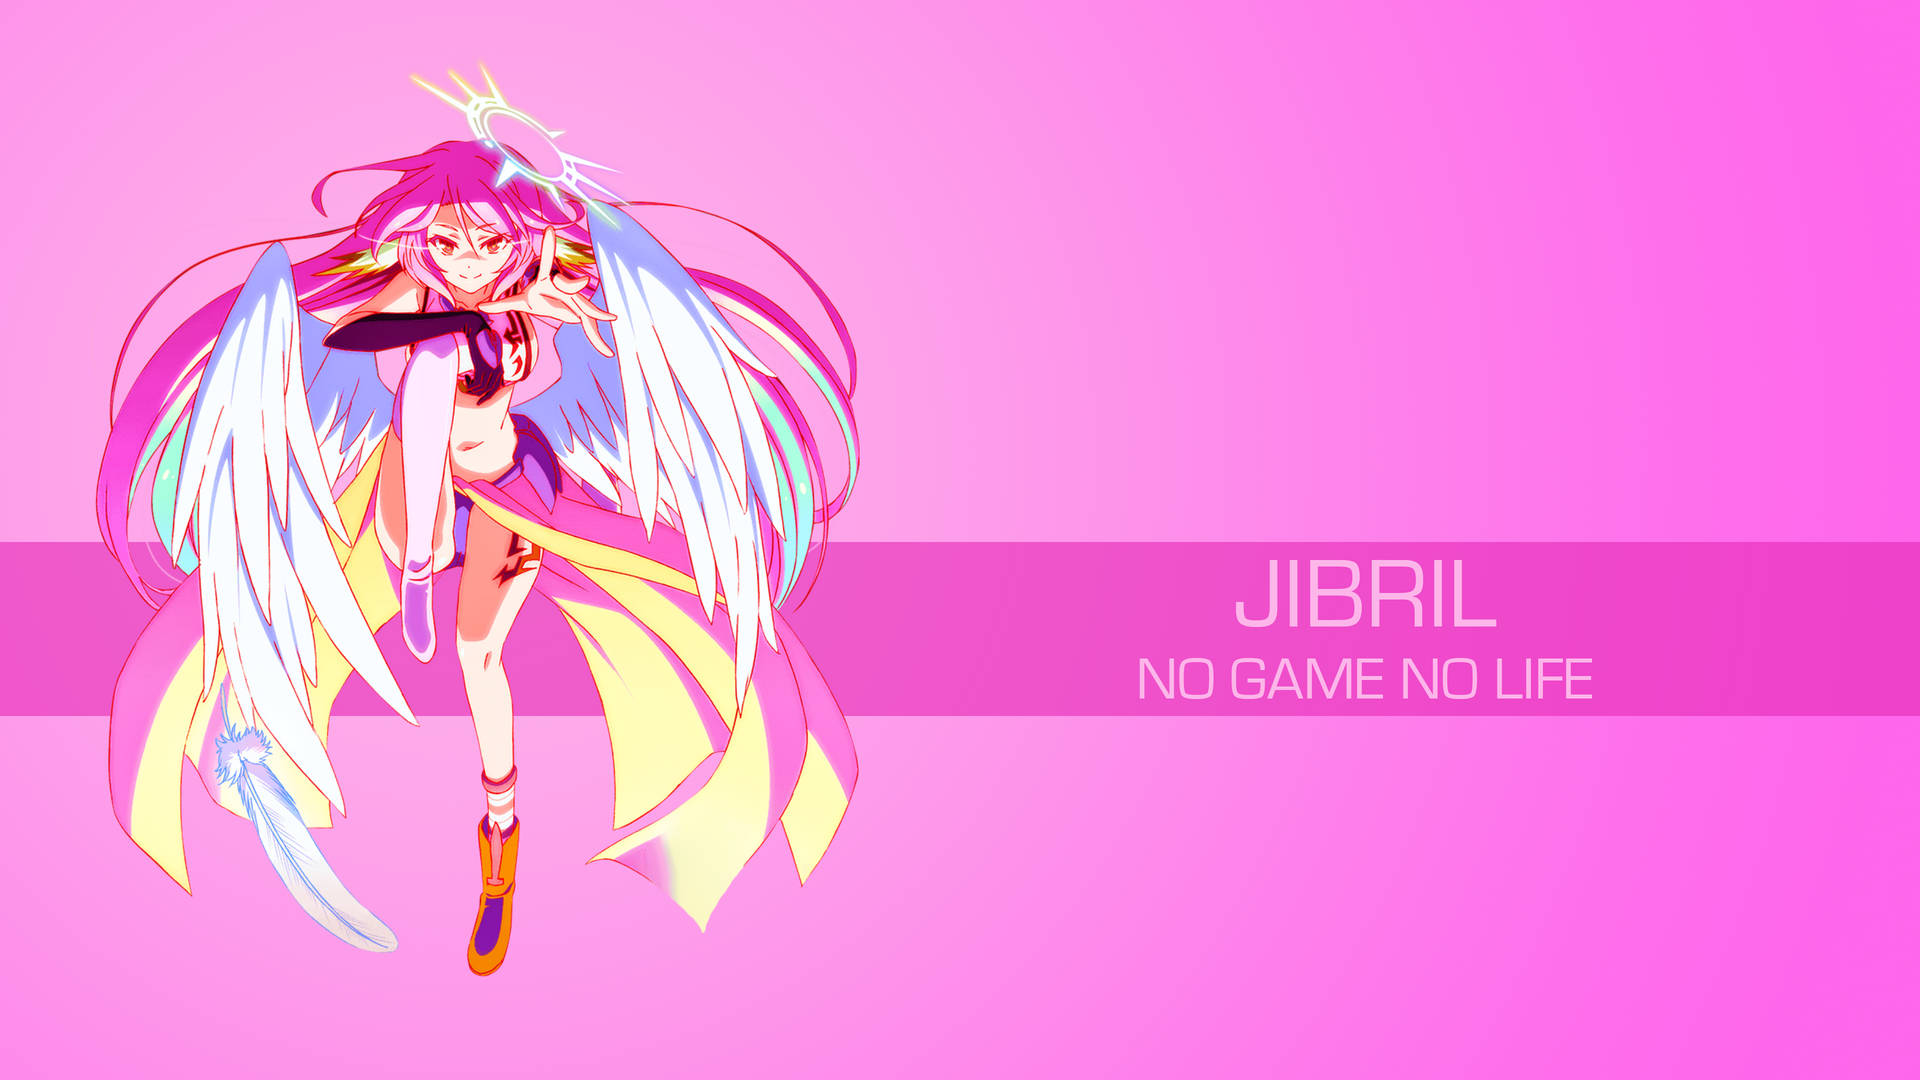 No Game No Life Jibril Poster